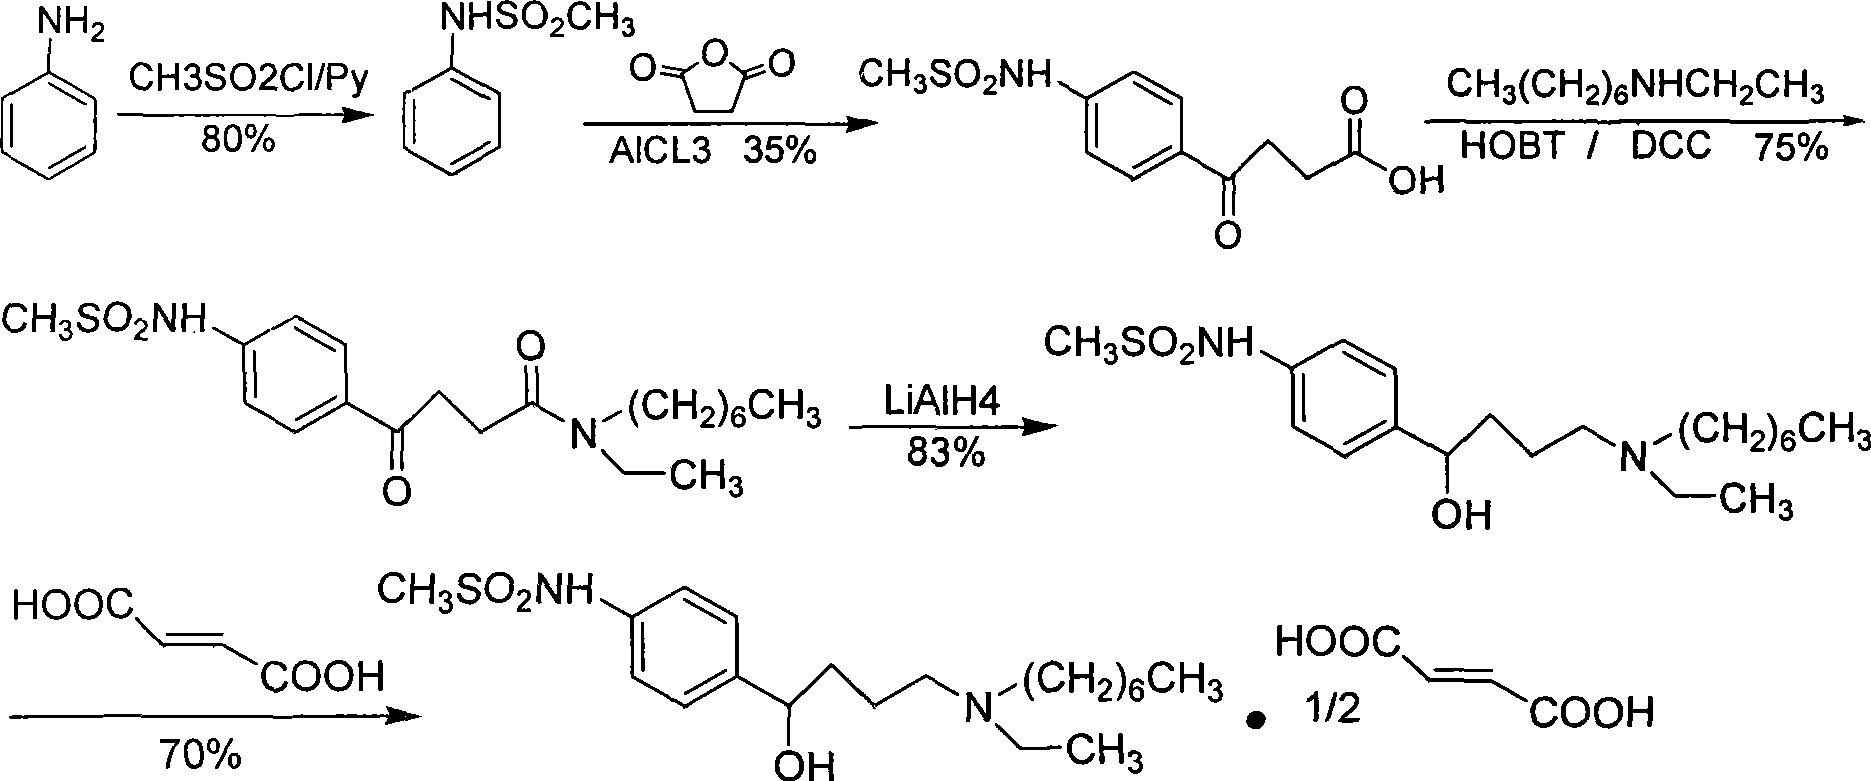 Ibutilide fumarate synthetic process